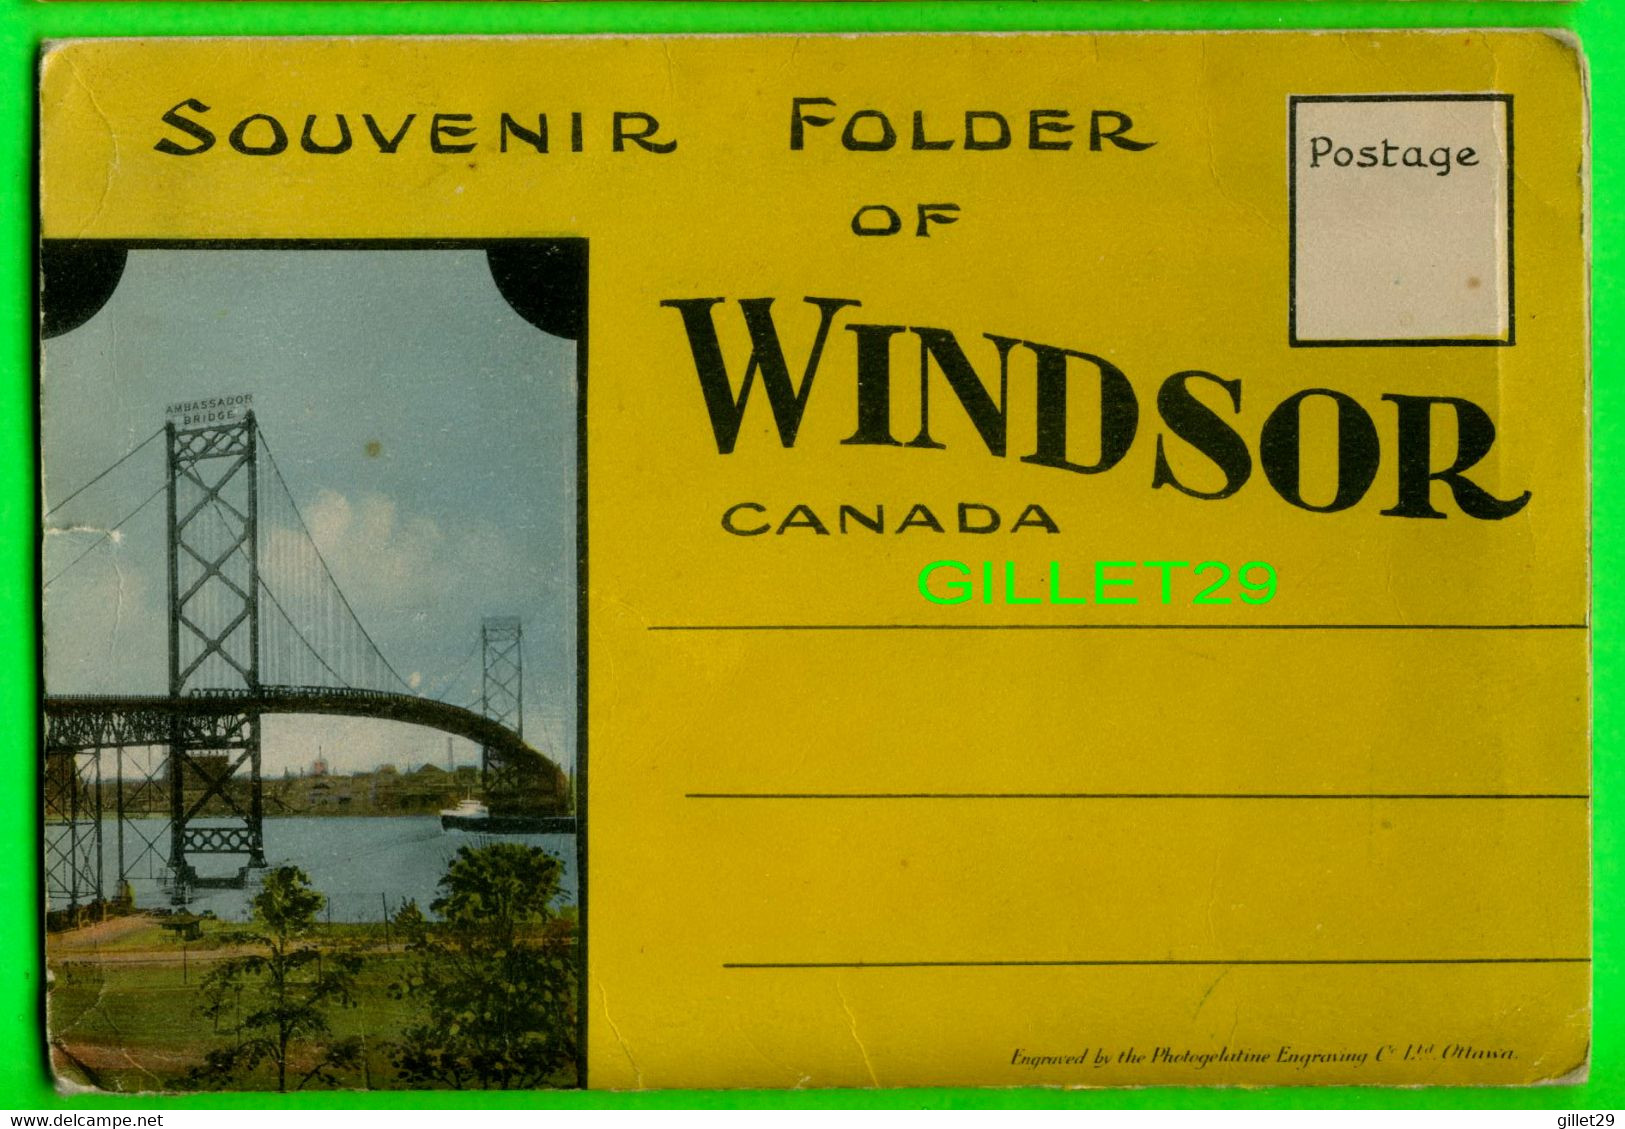 WINDSOR, ONTARIO - CARNET SOUVENIR FOLDER IF WINDSOR - THE OHOTOGELATINE ENGRAVING CO - 18 PHOTOS - - Windsor